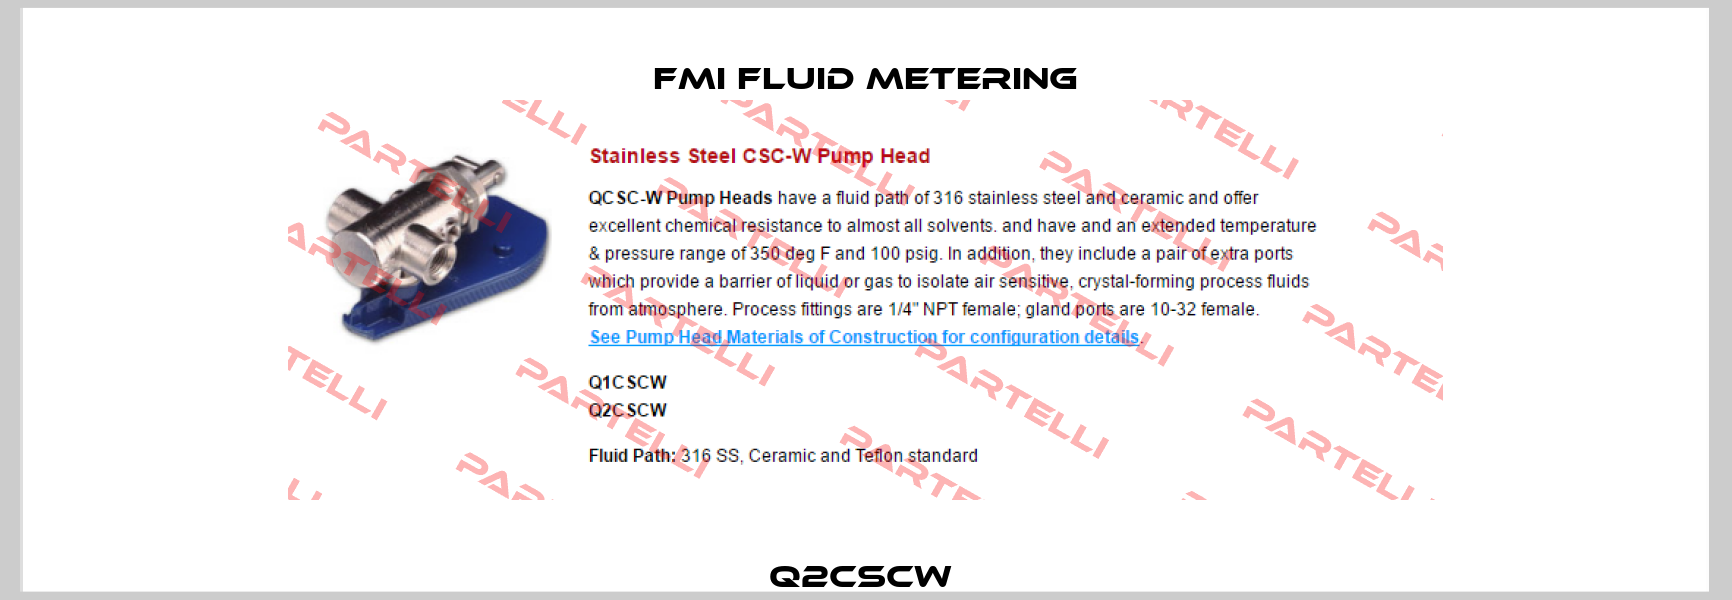 Q2CSCW  FMI Fluid Metering